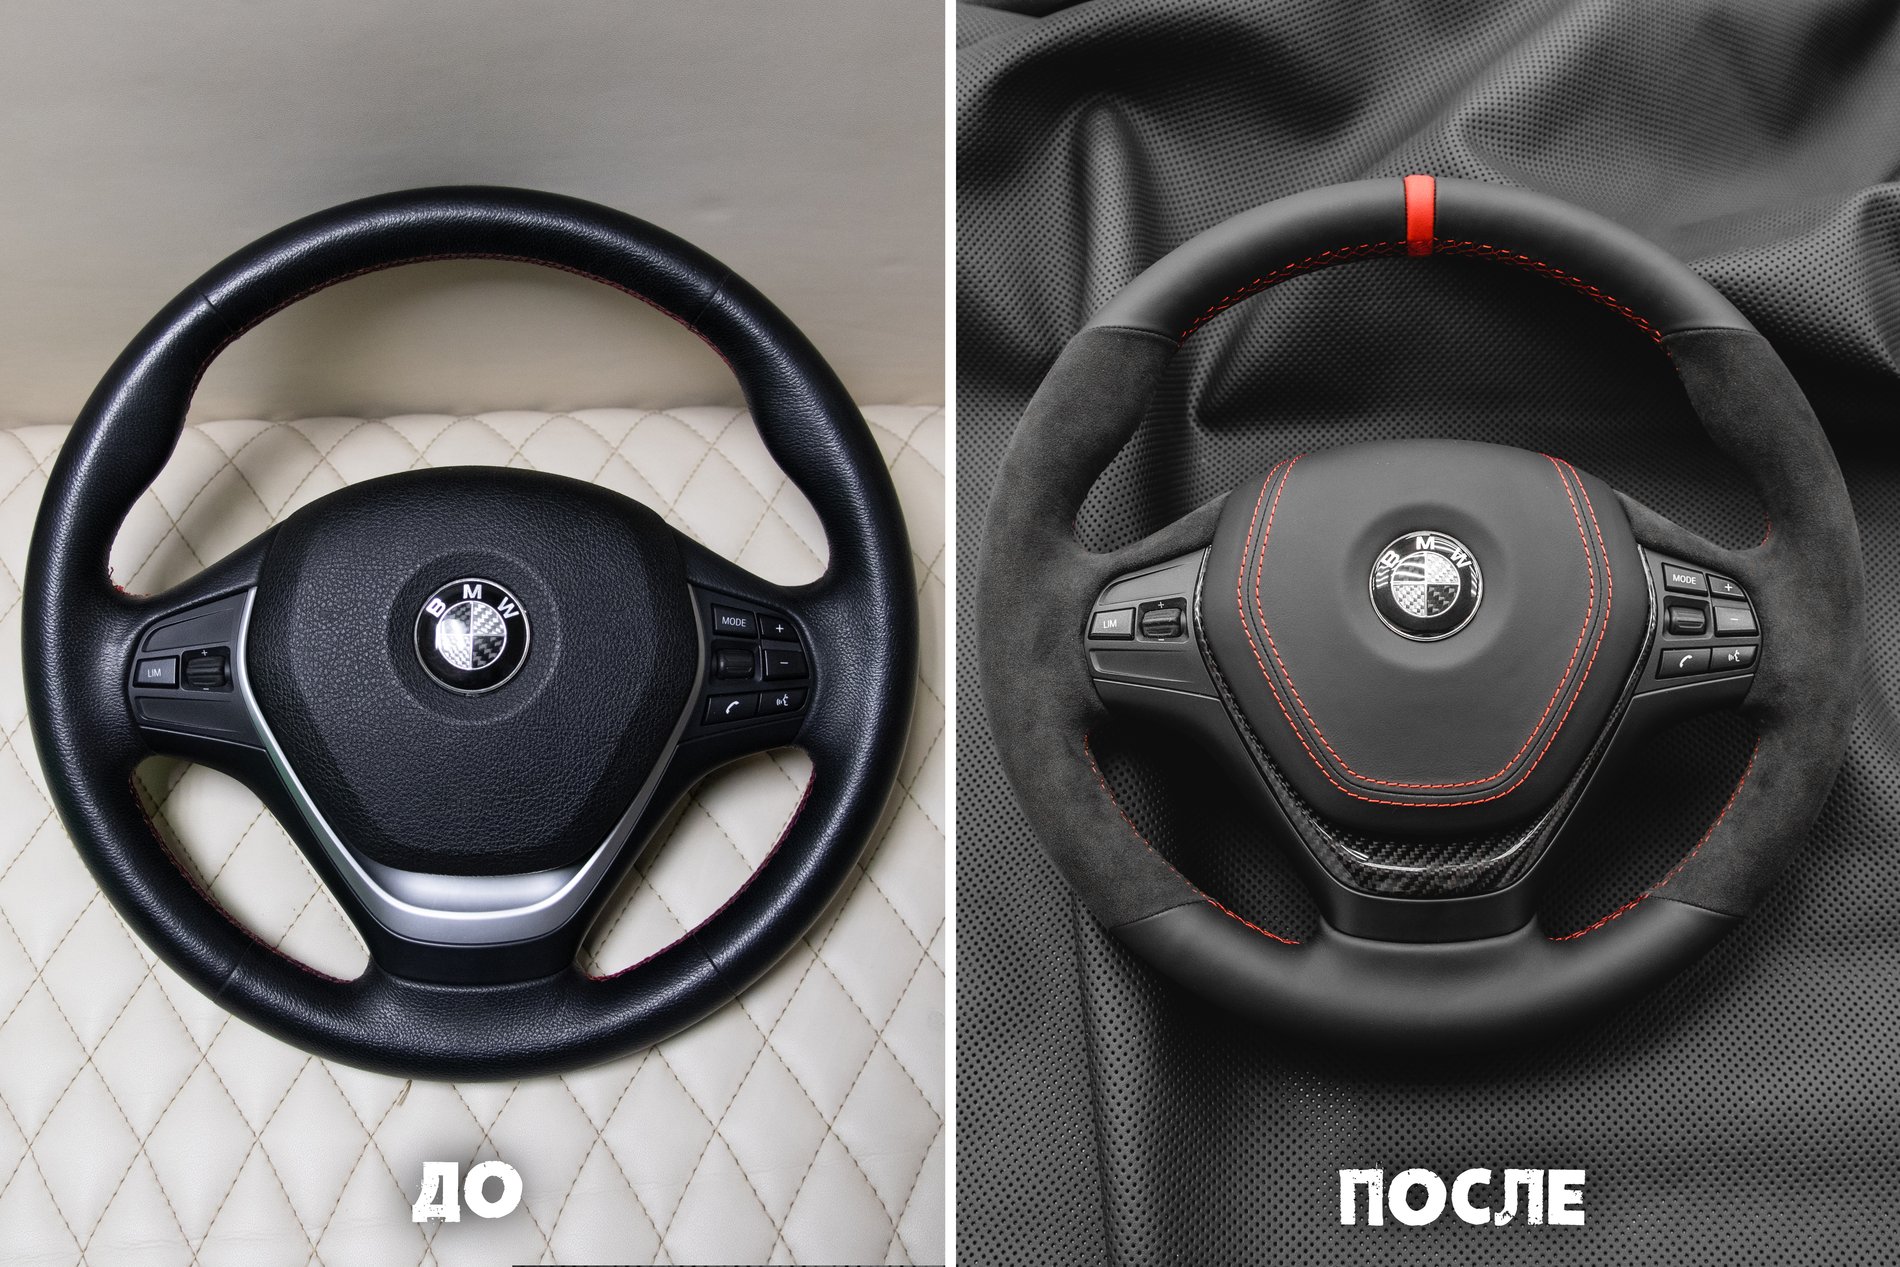 BMW 6(f13) - перетяжка руля в алькантару и перешив подушки в натуральную кожу.